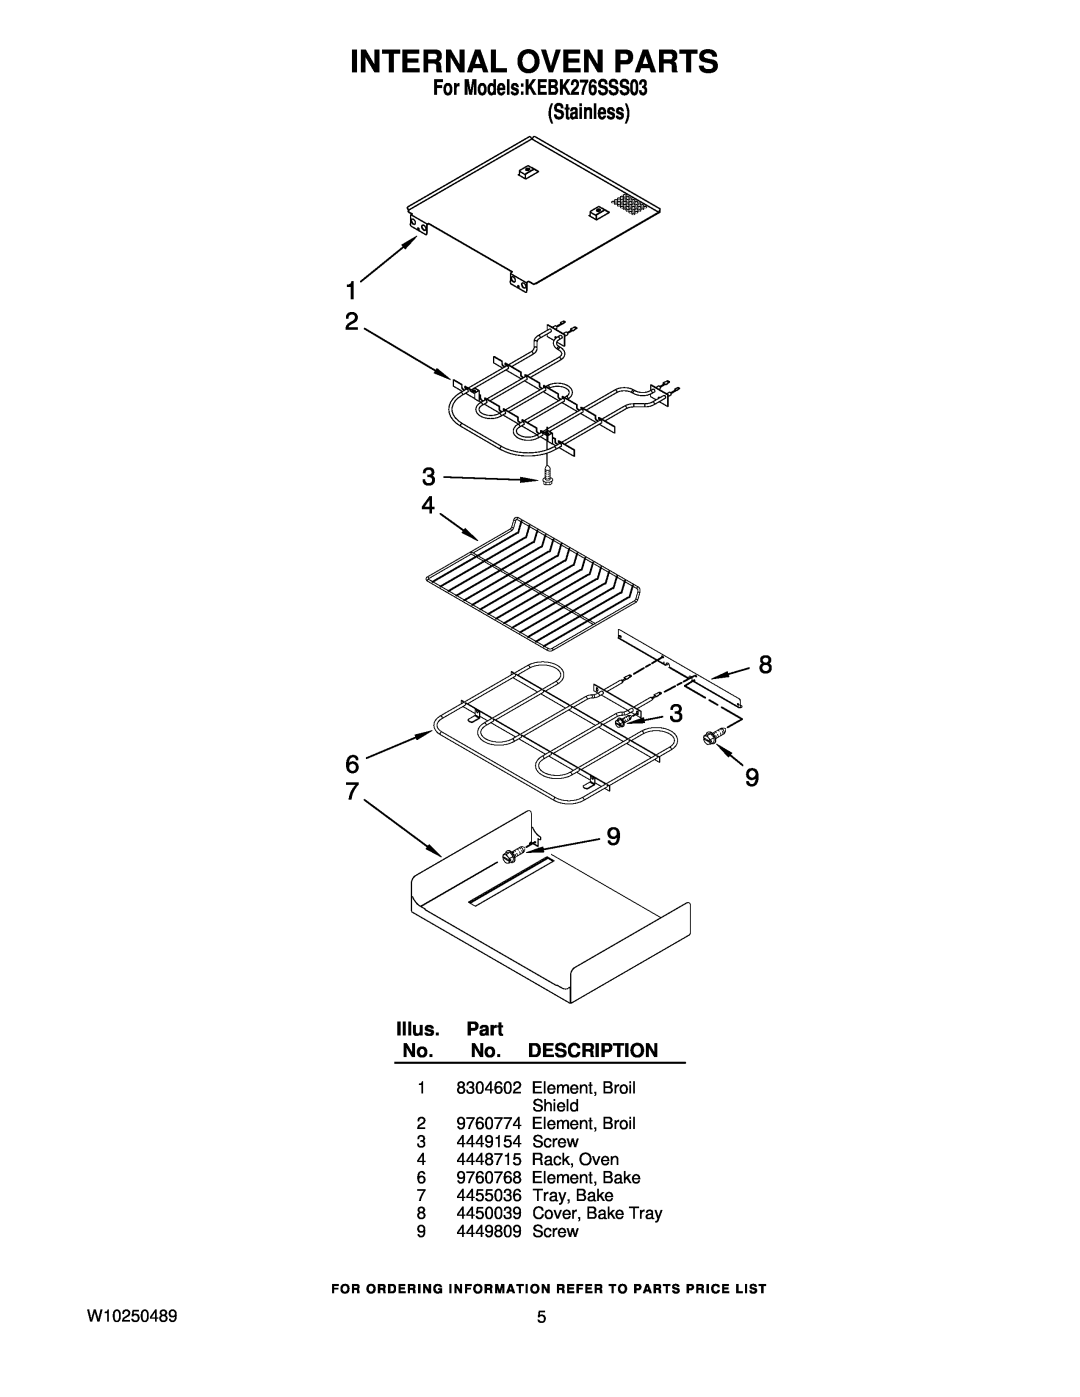 KitchenAid manual Internal Oven Parts, Illus. Part No. No. DESCRIPTION, For ModelsKEBK276SSS03 Stainless 